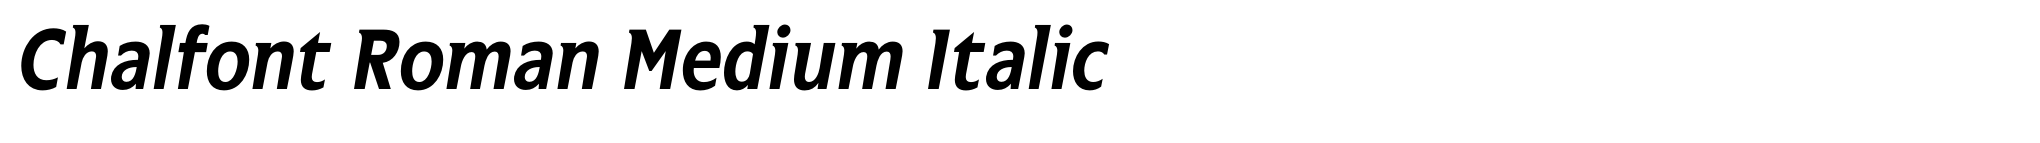 Chalfont Roman Medium Italic image